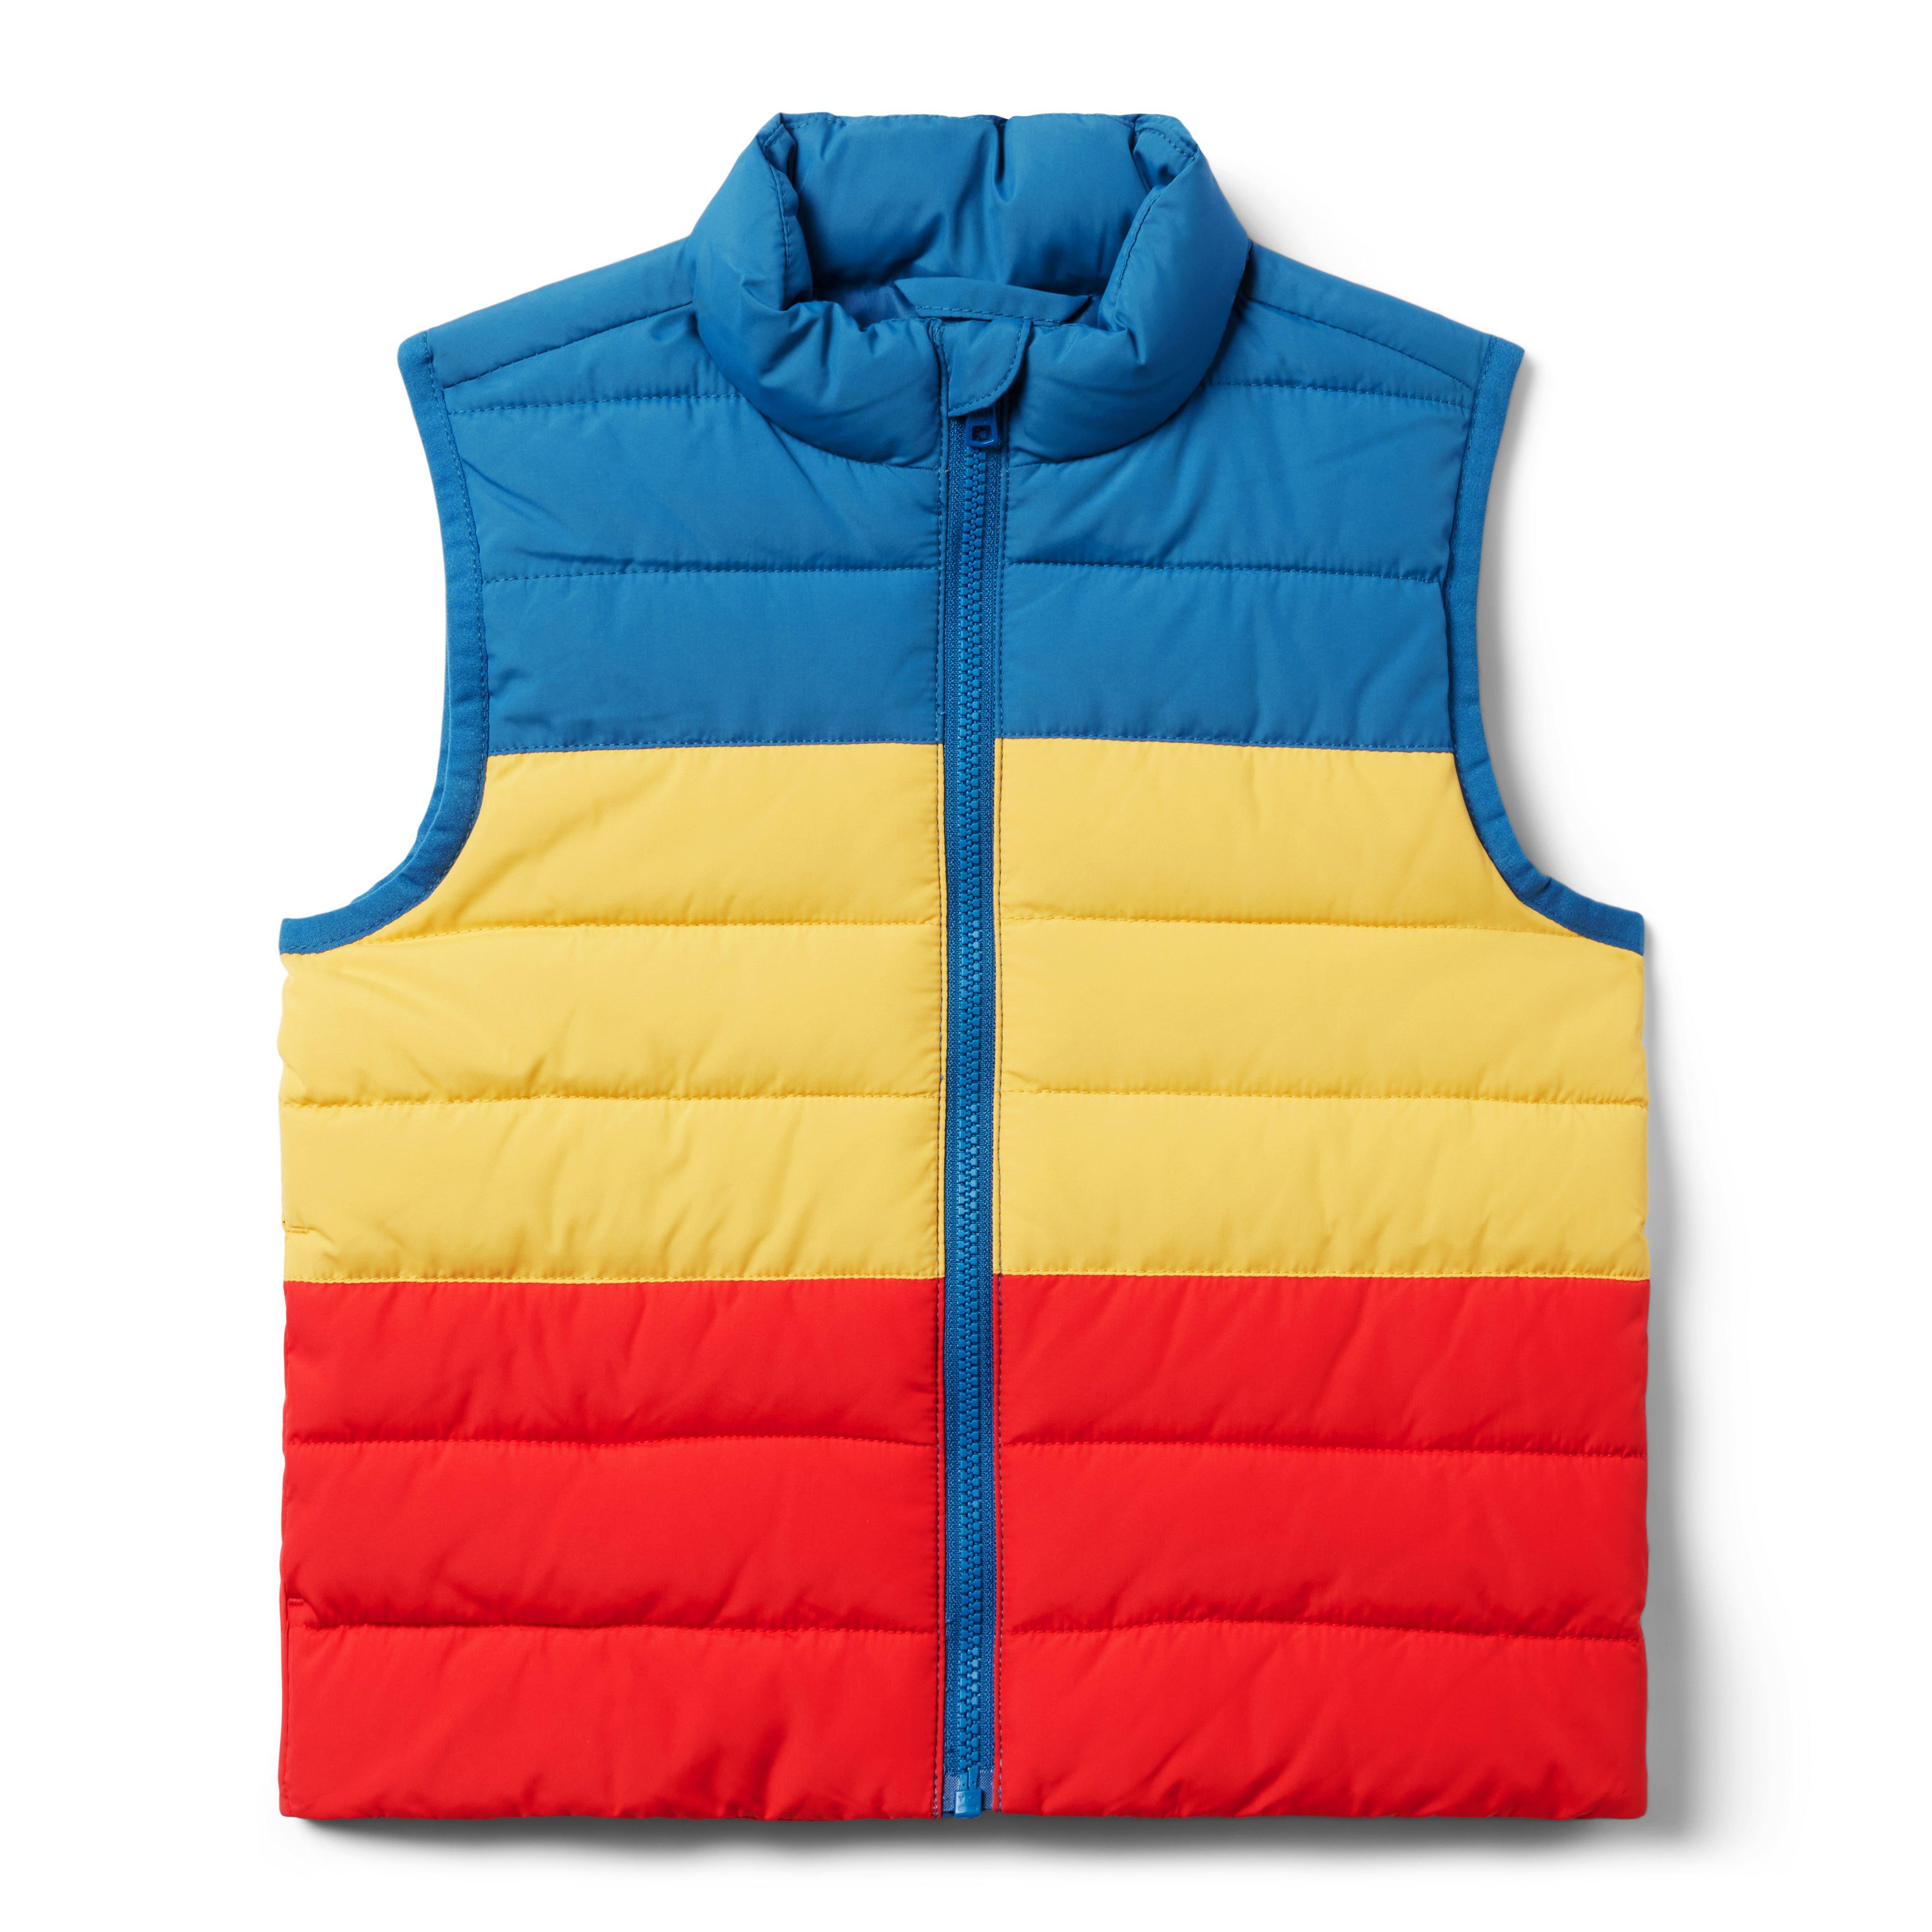 Colorblocked Puffer Vest